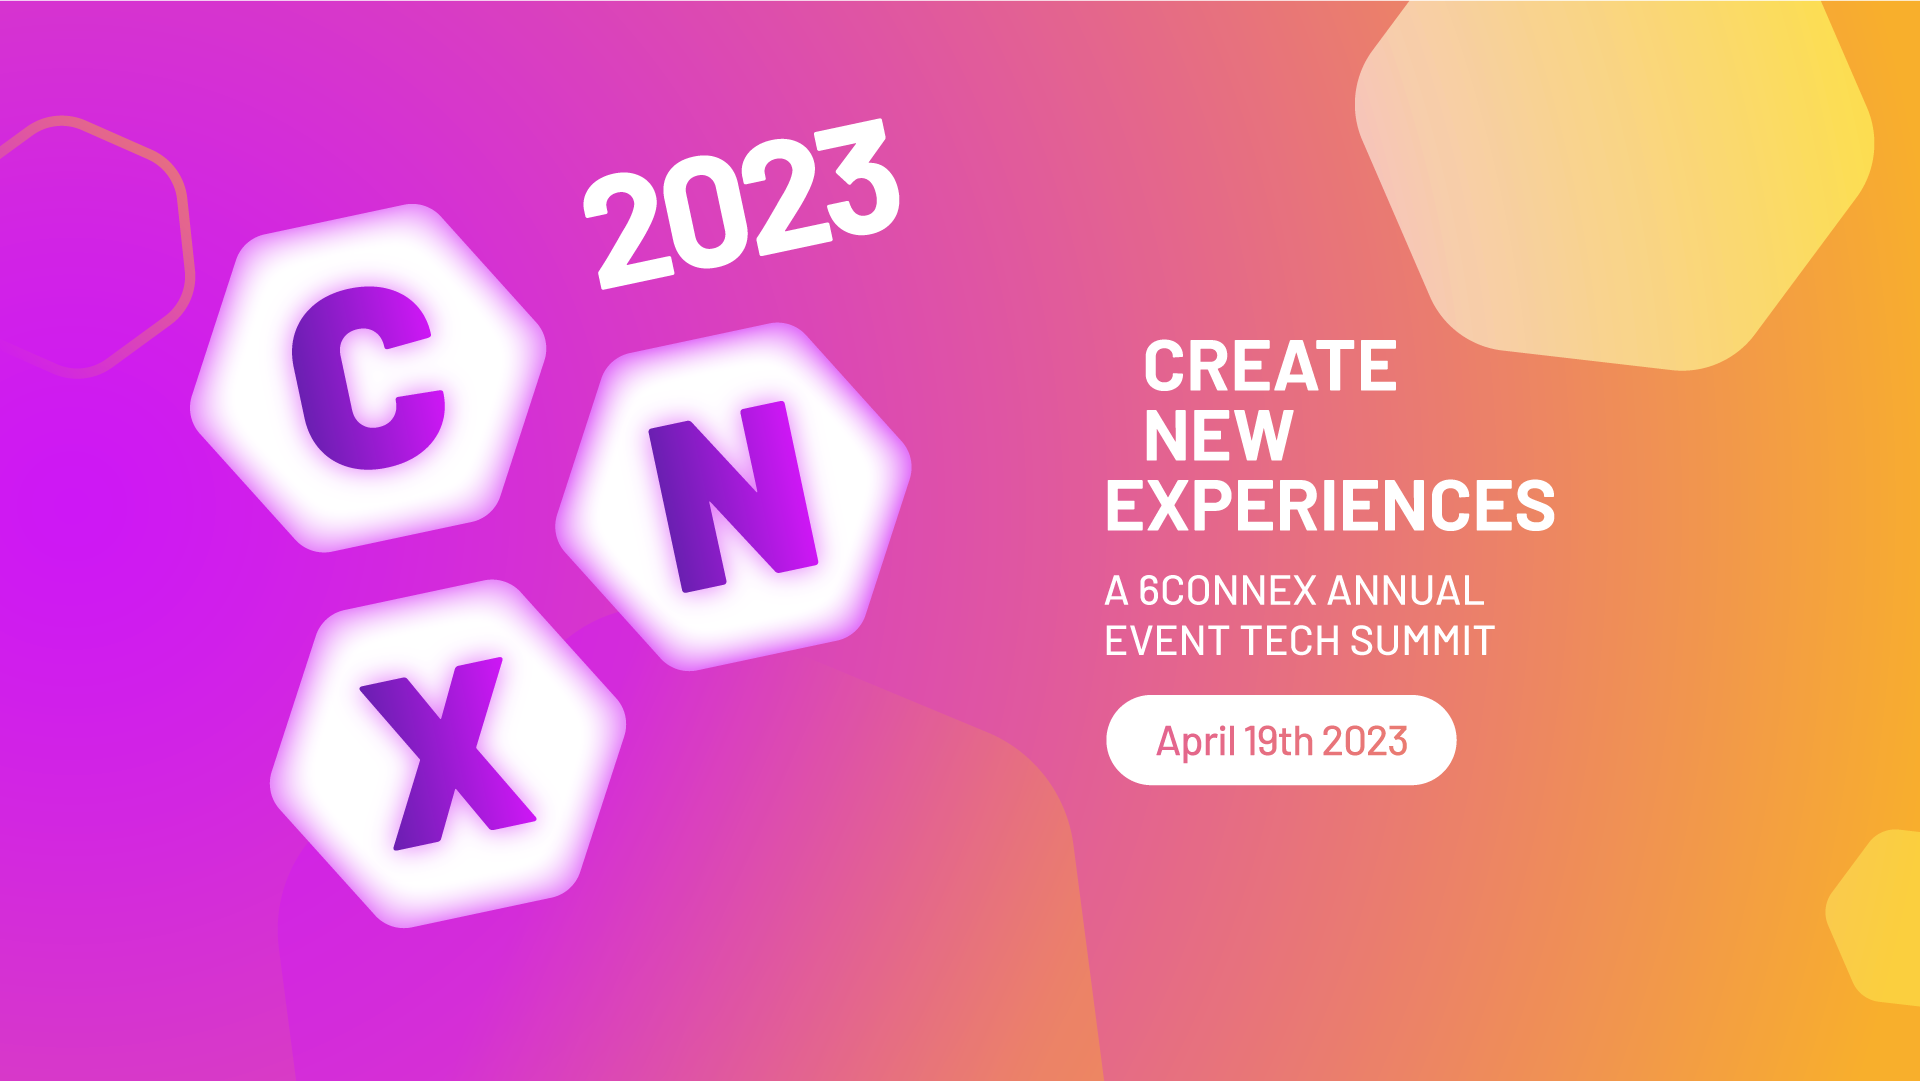 CNX 2023 6Connex event tech summit